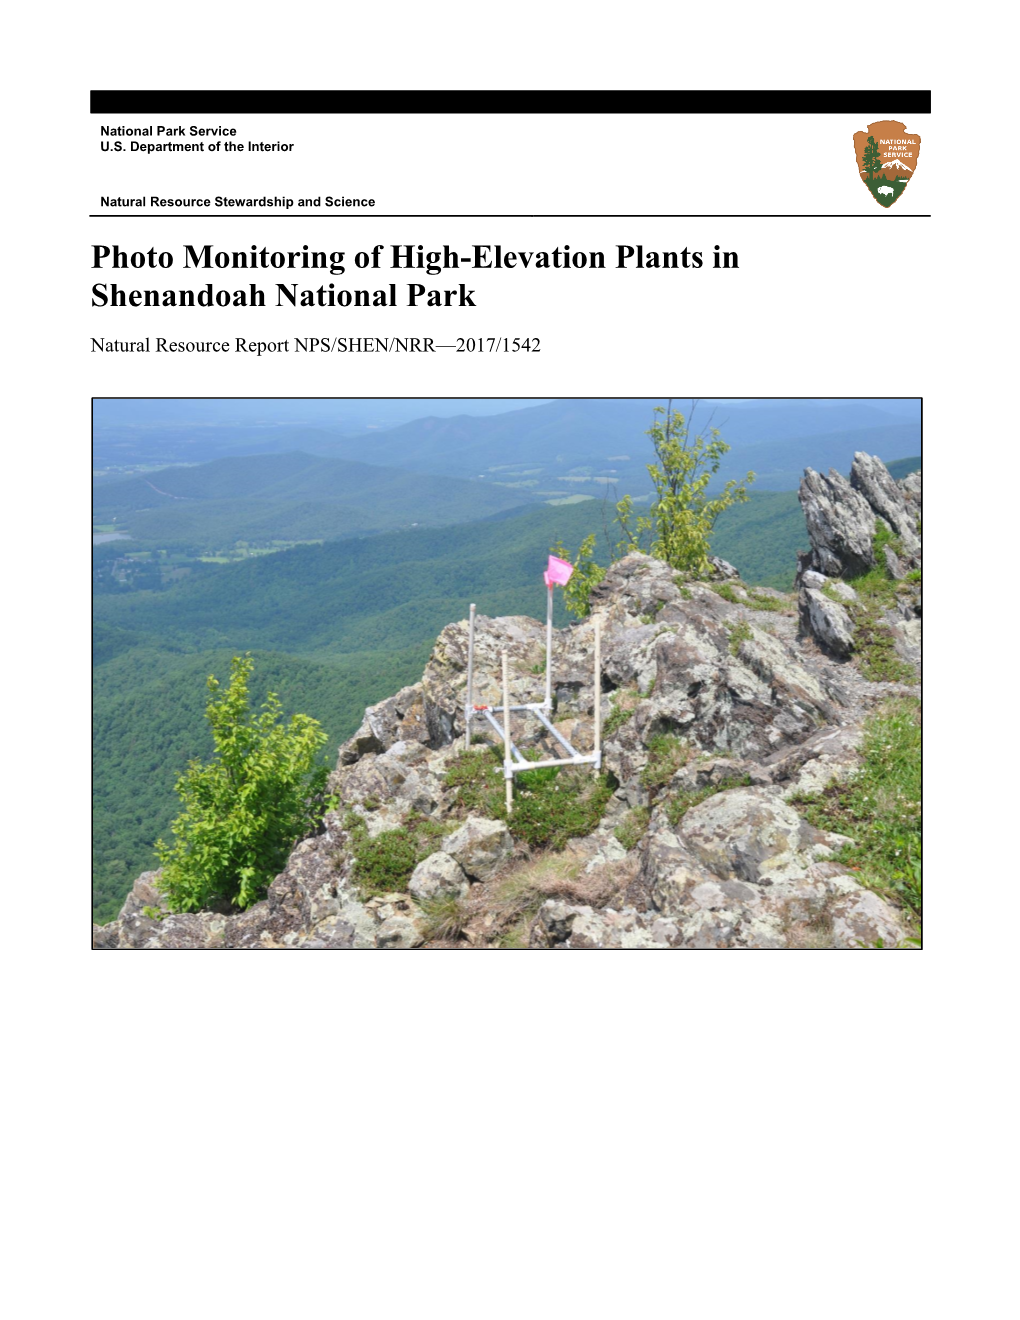 Photo Monitoring of High-Elevation Plants in Shenandoah National Park